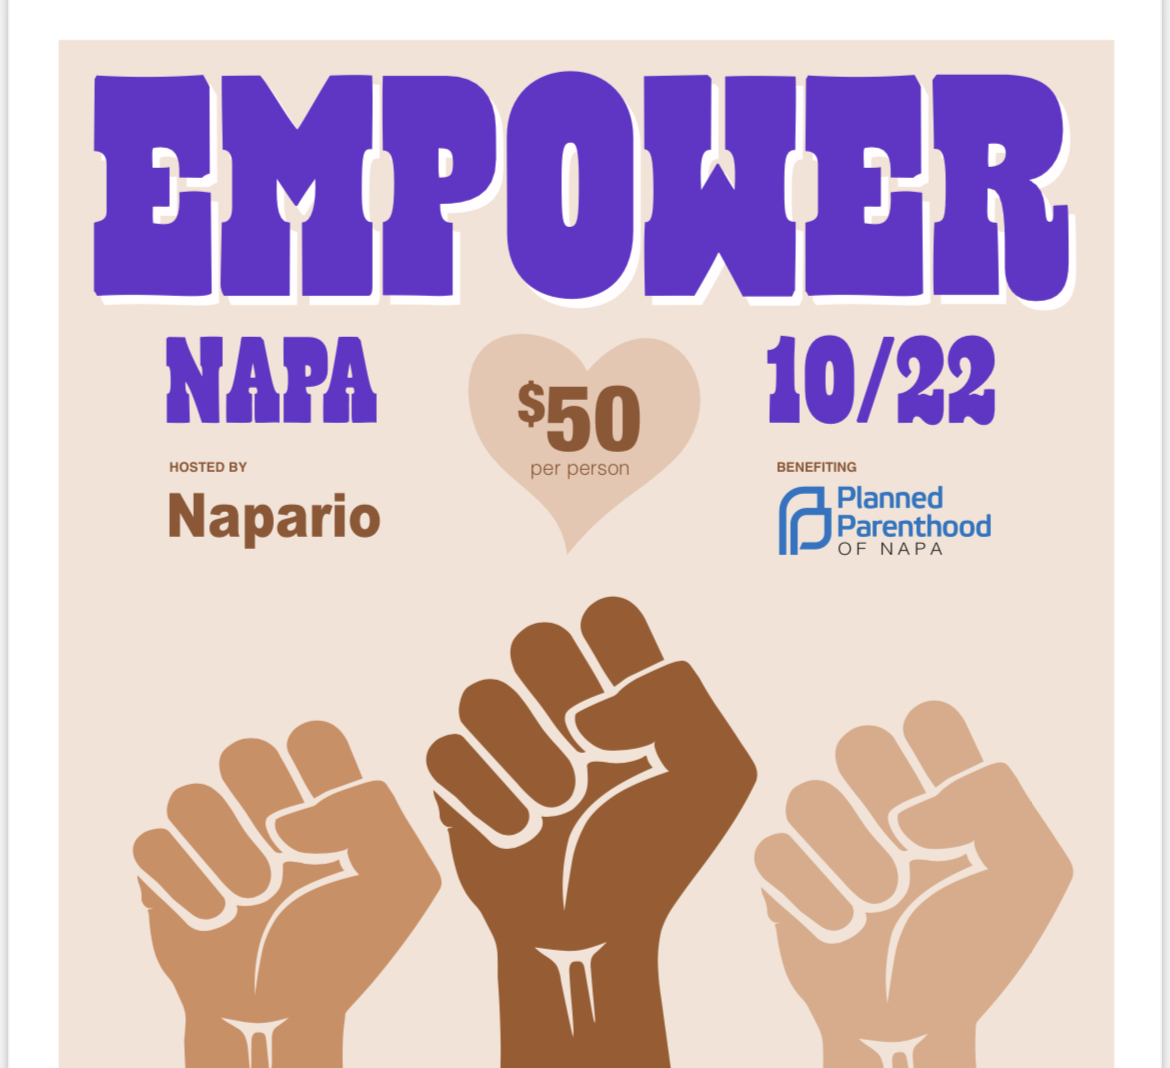 Empower Napa